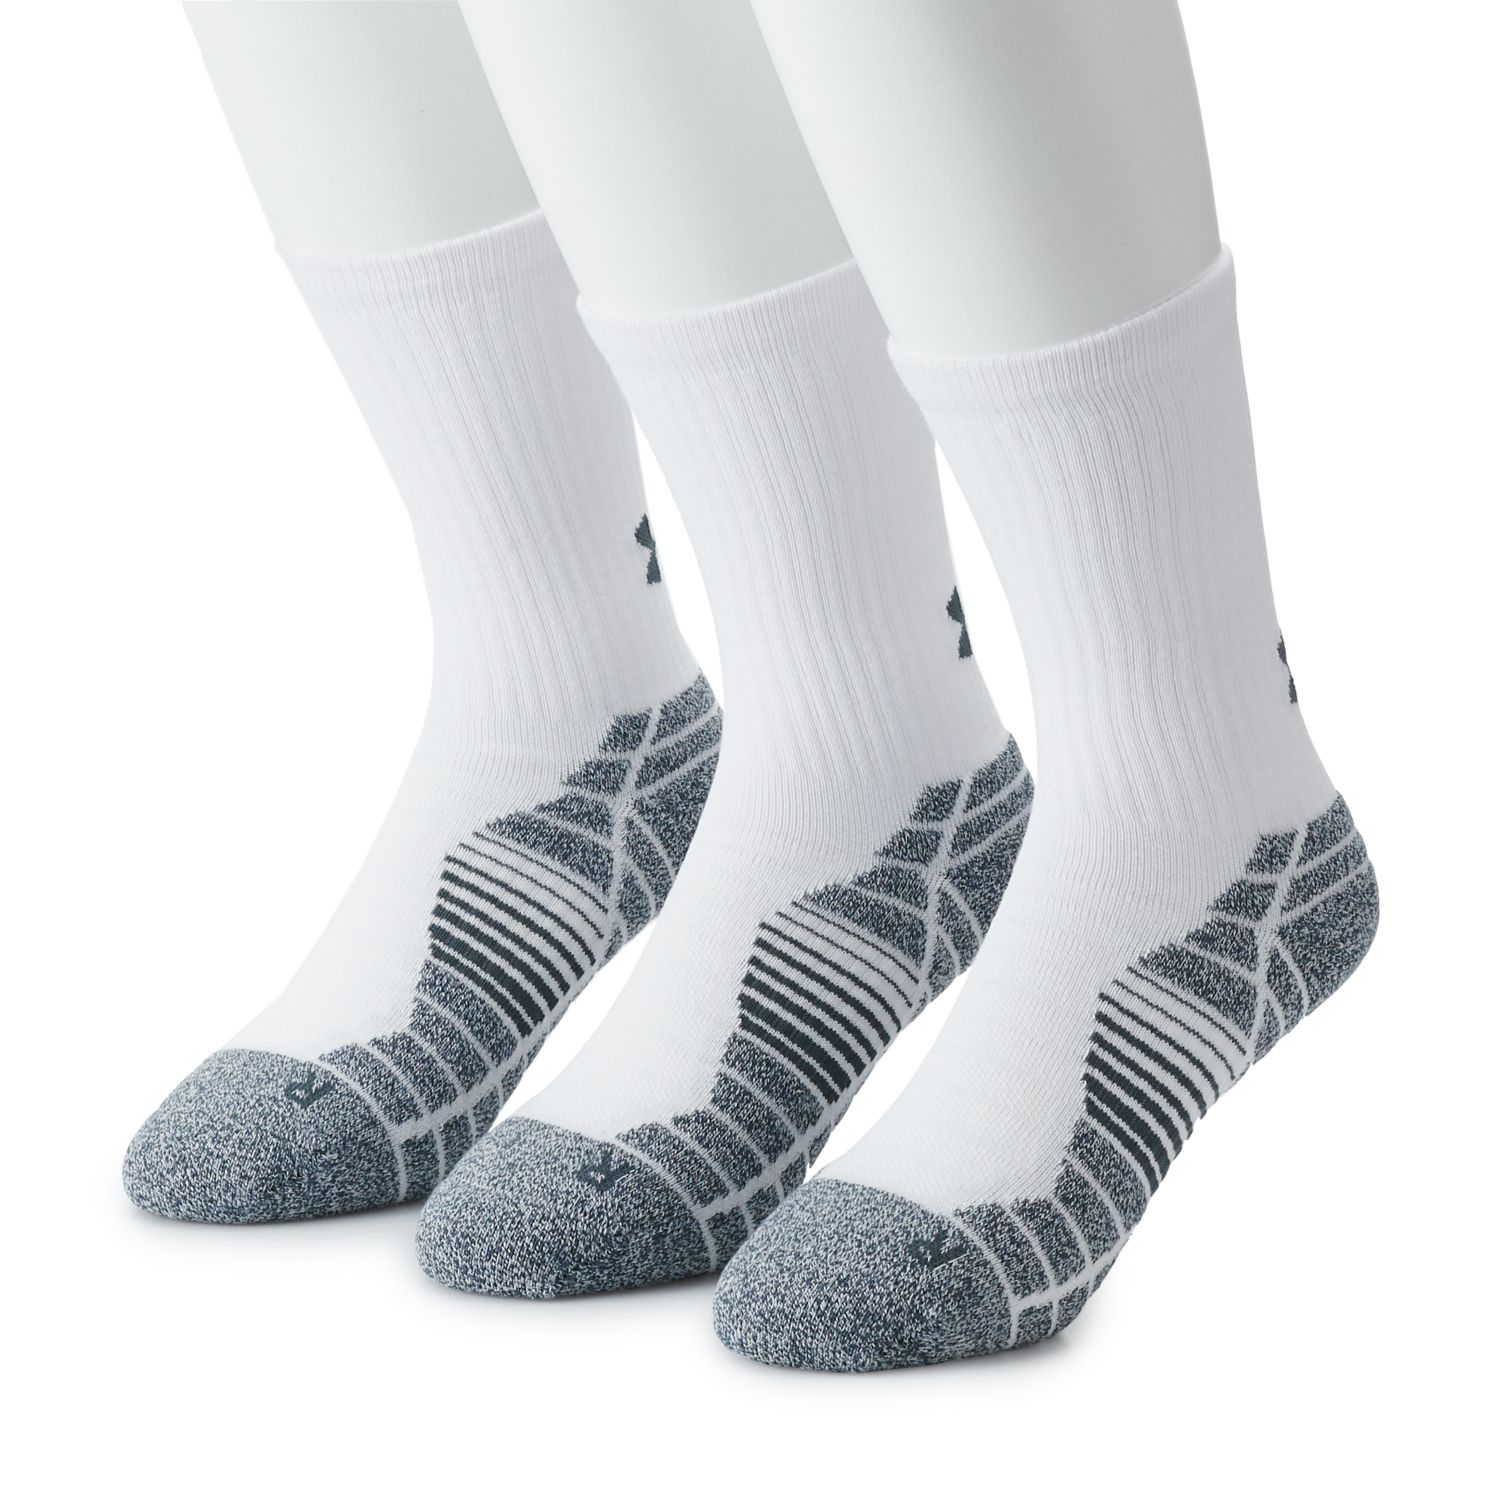 White Under Armour Socks Best Sale, 58% OFF | espirituviajero.com